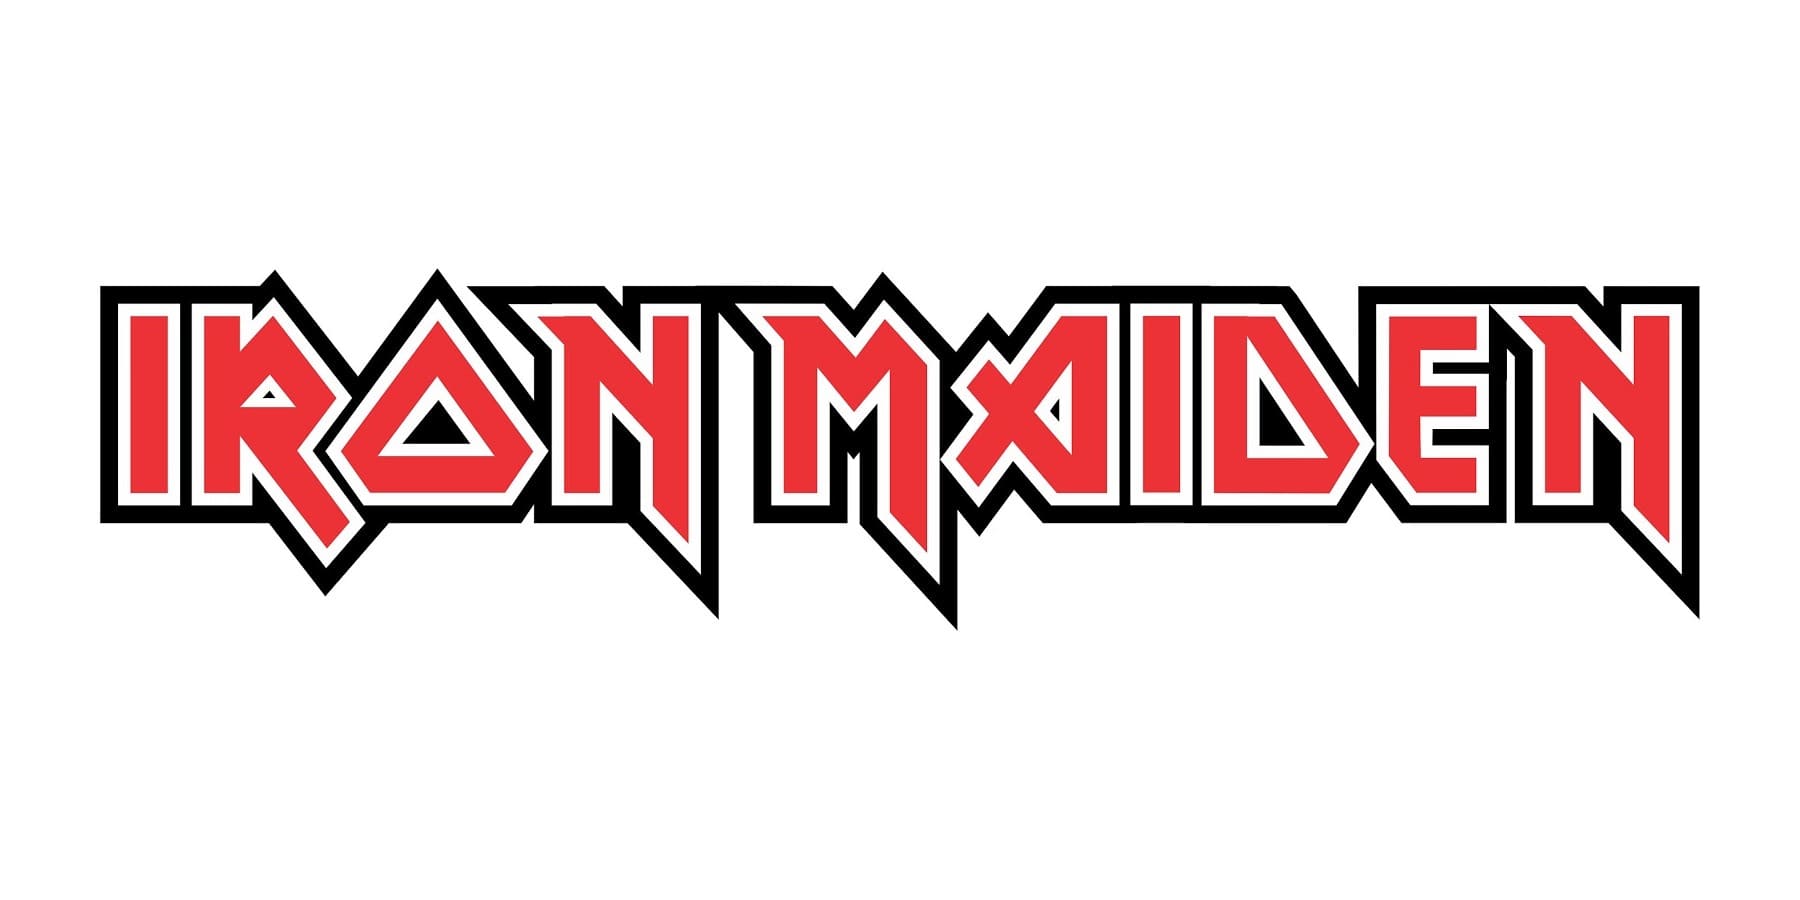 Iron Maiden Symbol